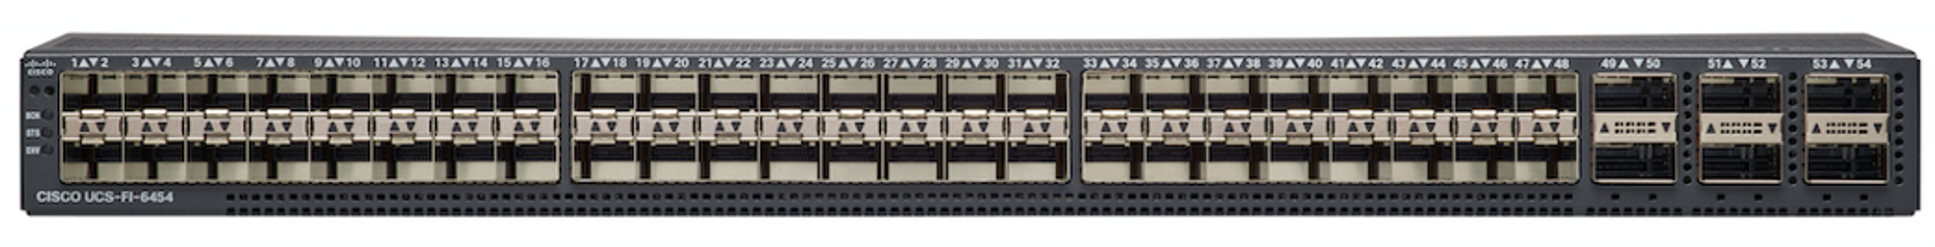 Cisco UCS 6454 (1RU) 54-Port Fabric Interconnect_b